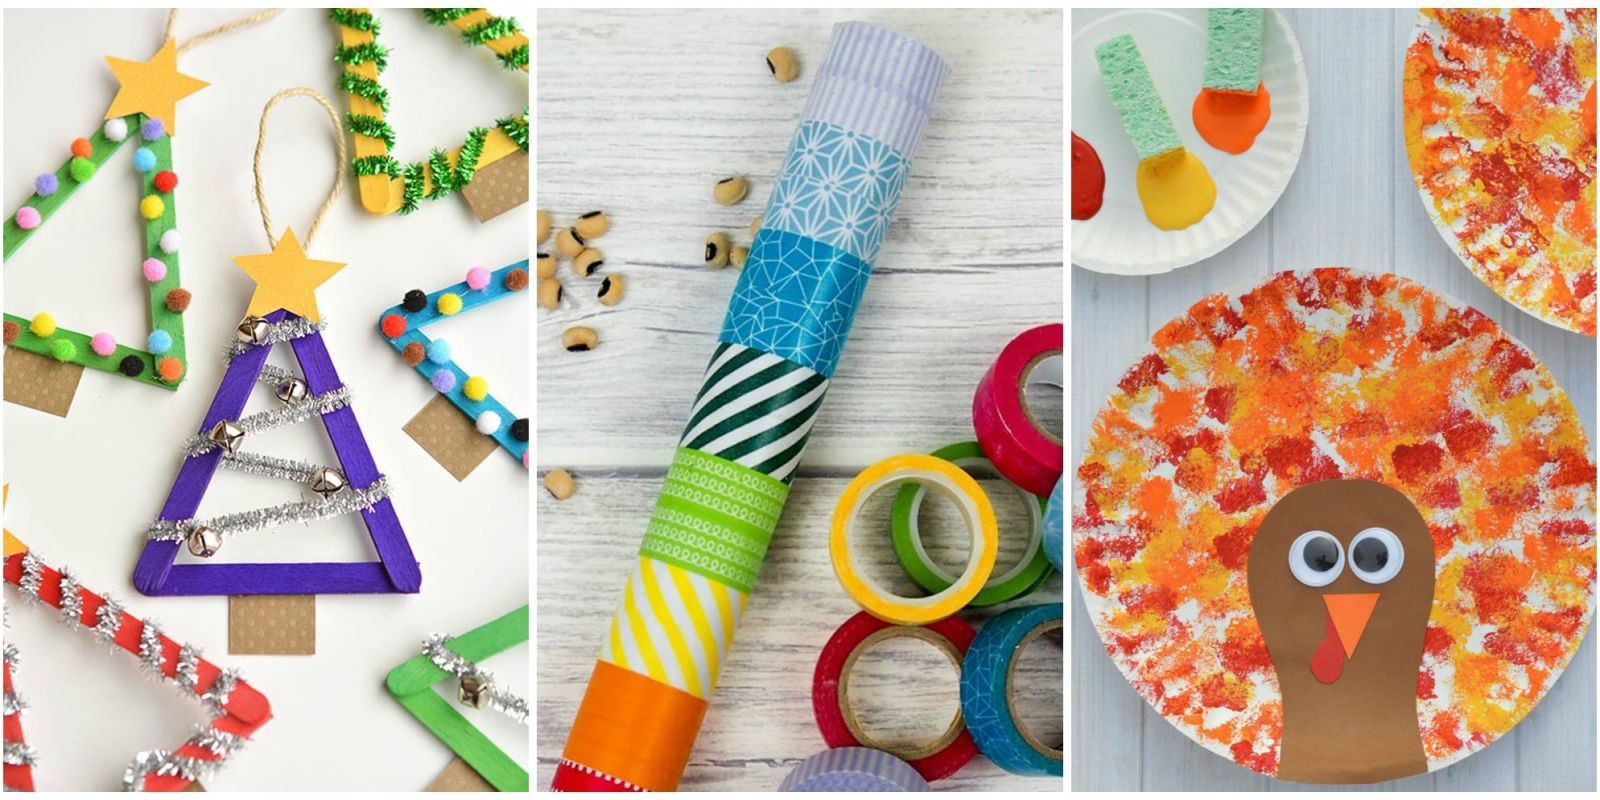 easy ribbon crafts